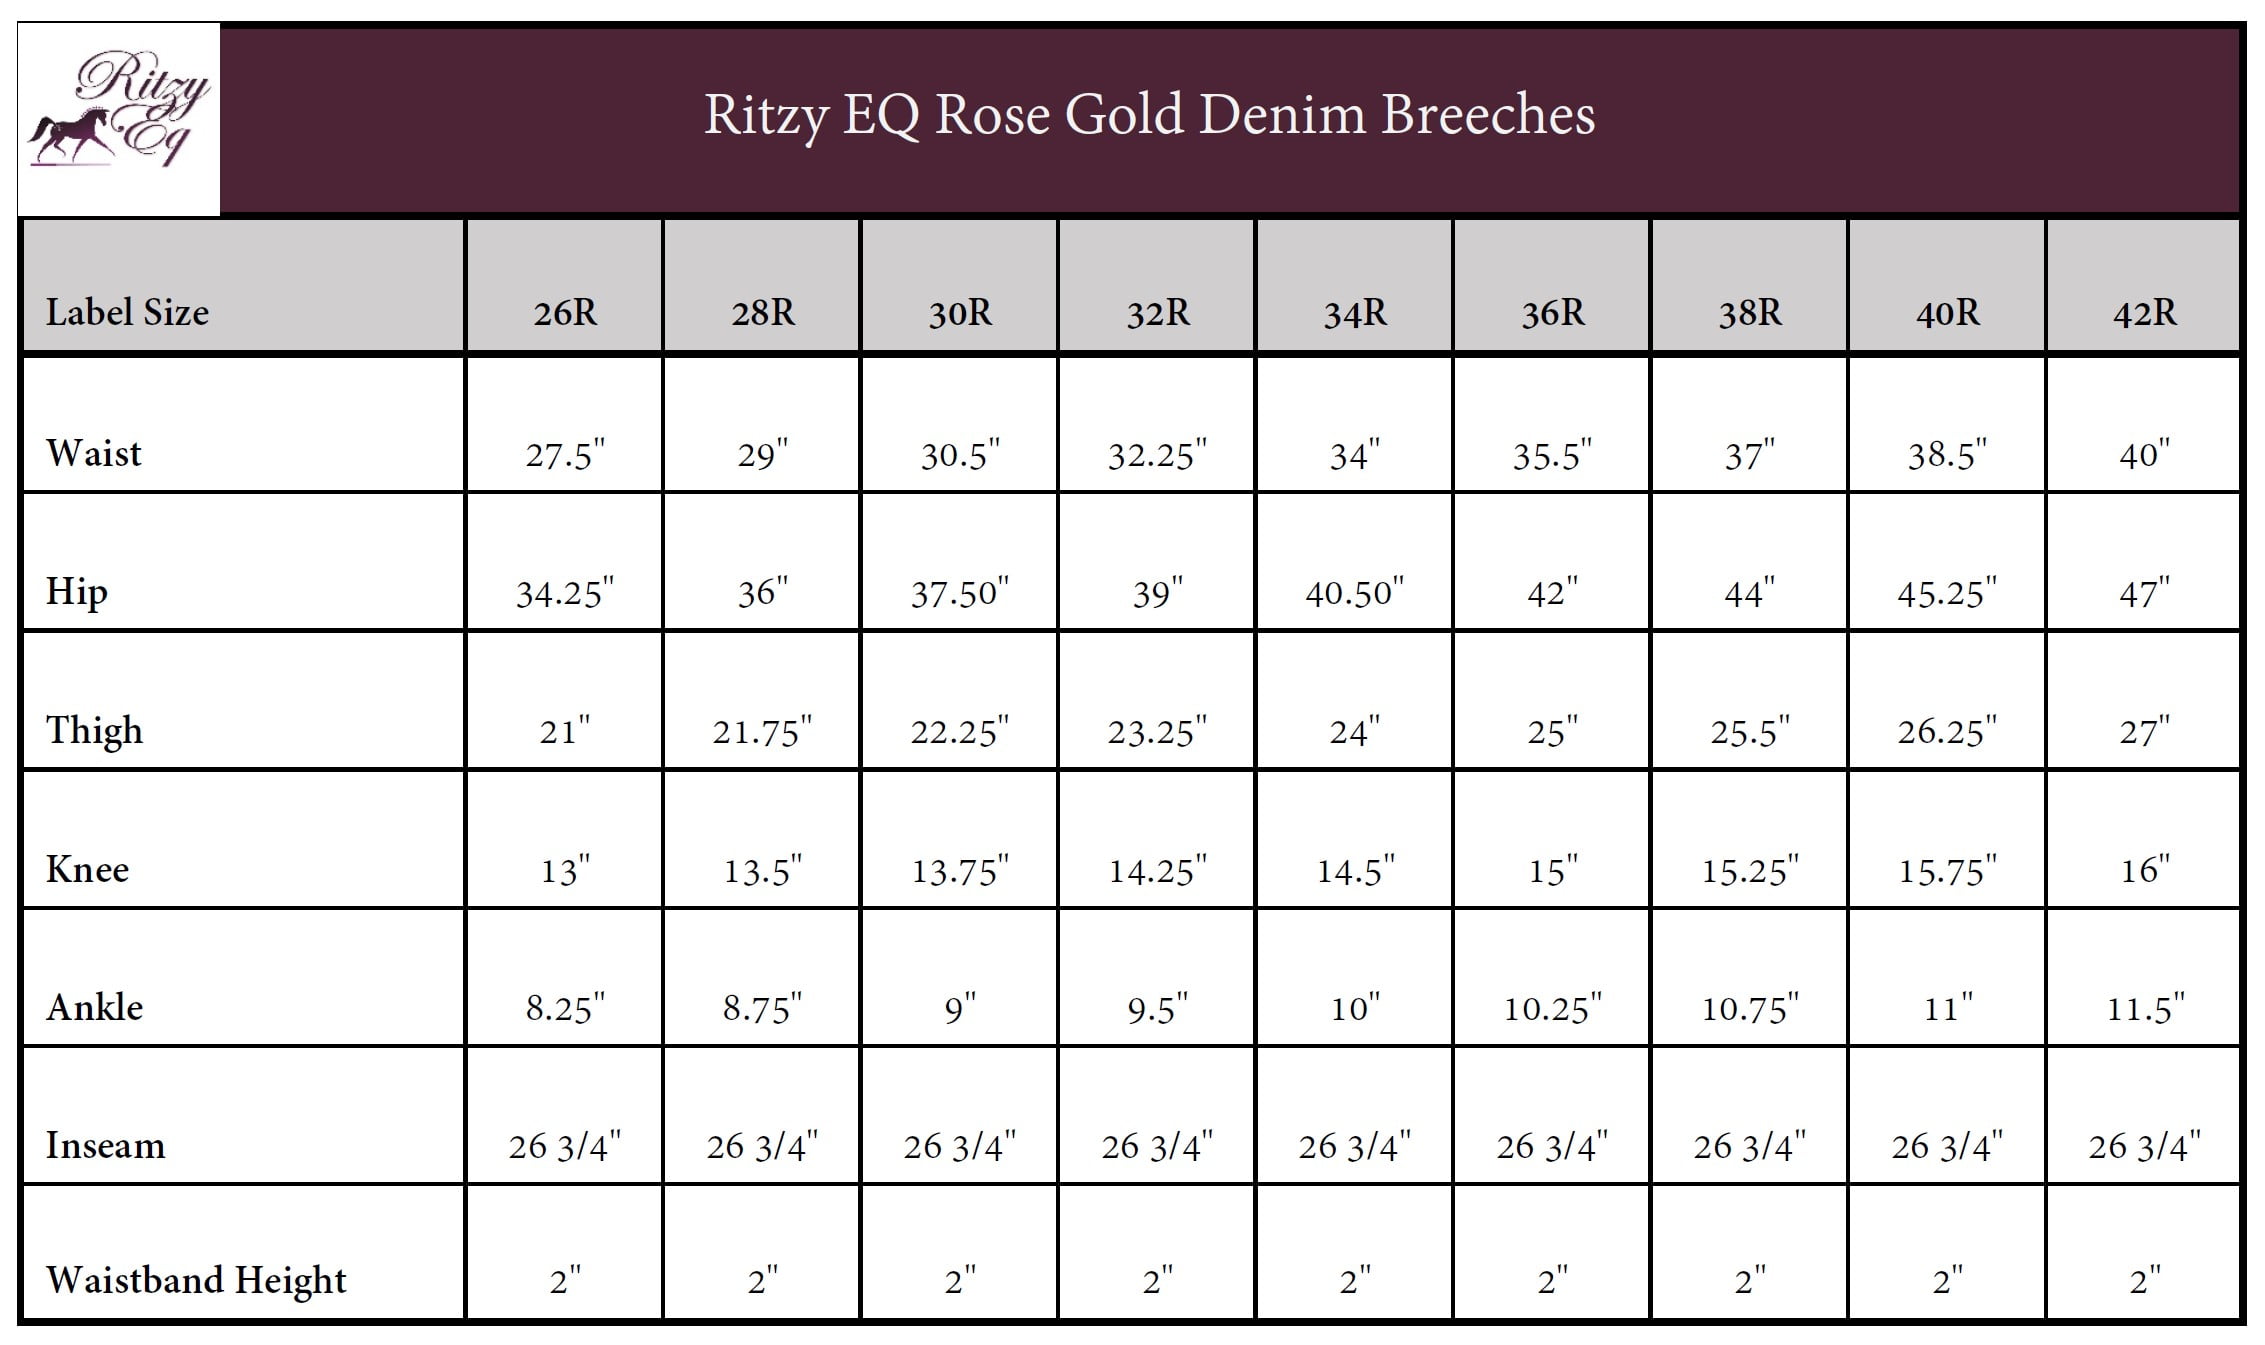 Ritzy EQ Rose Gold Denim Breeches Size Chart